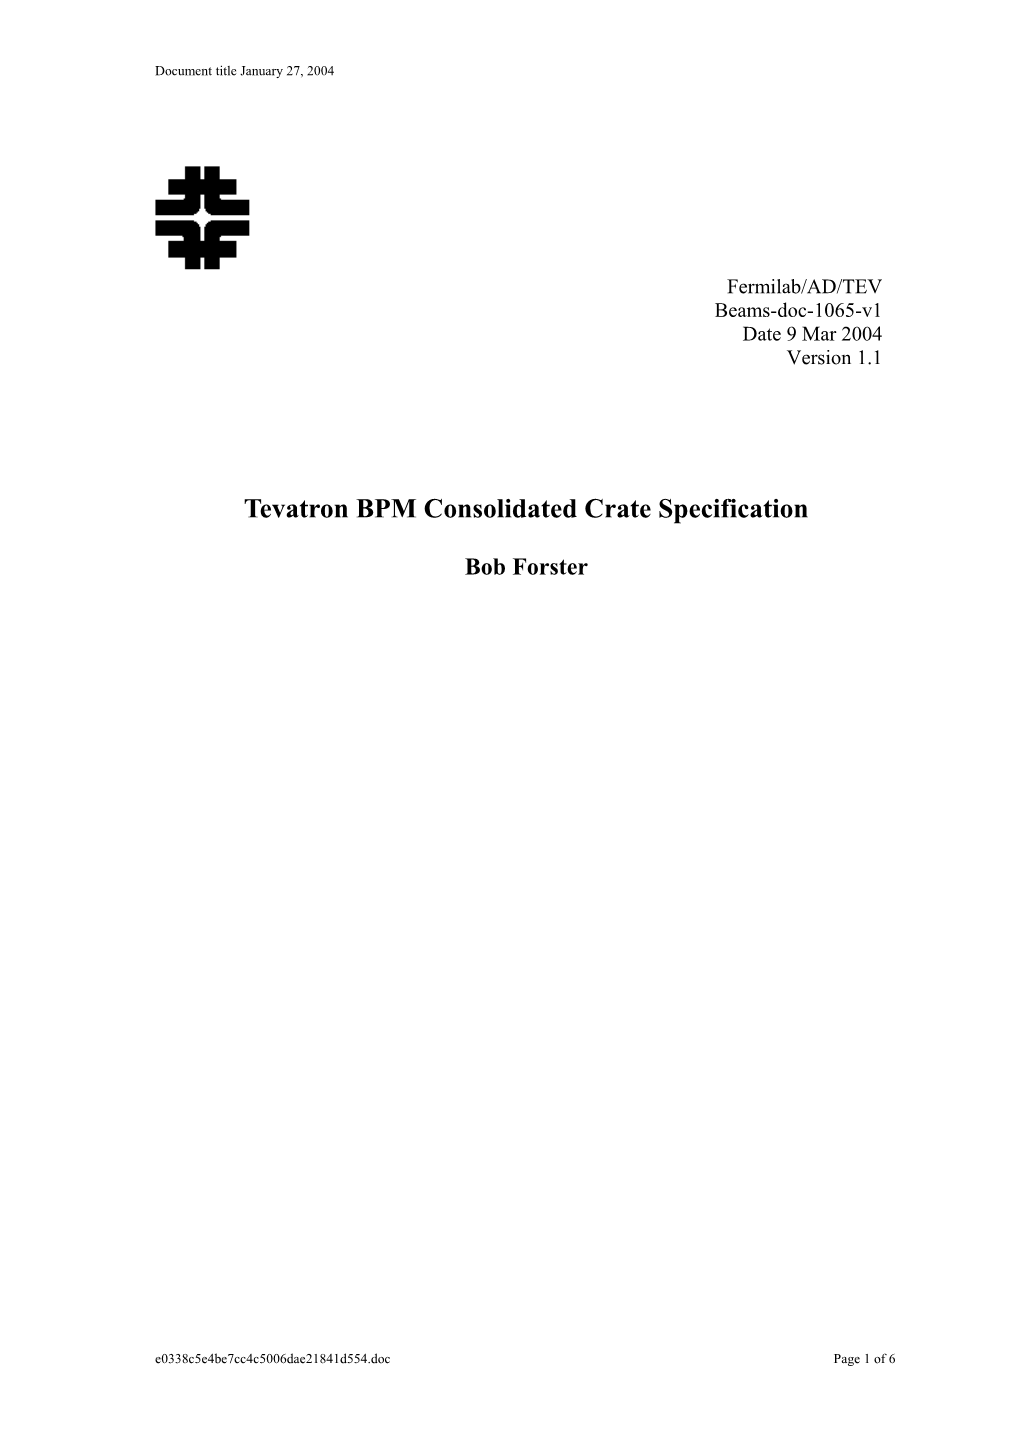 Tevatron BPM Consolidated Crate Specification (Draft) Memorandum of Understanding